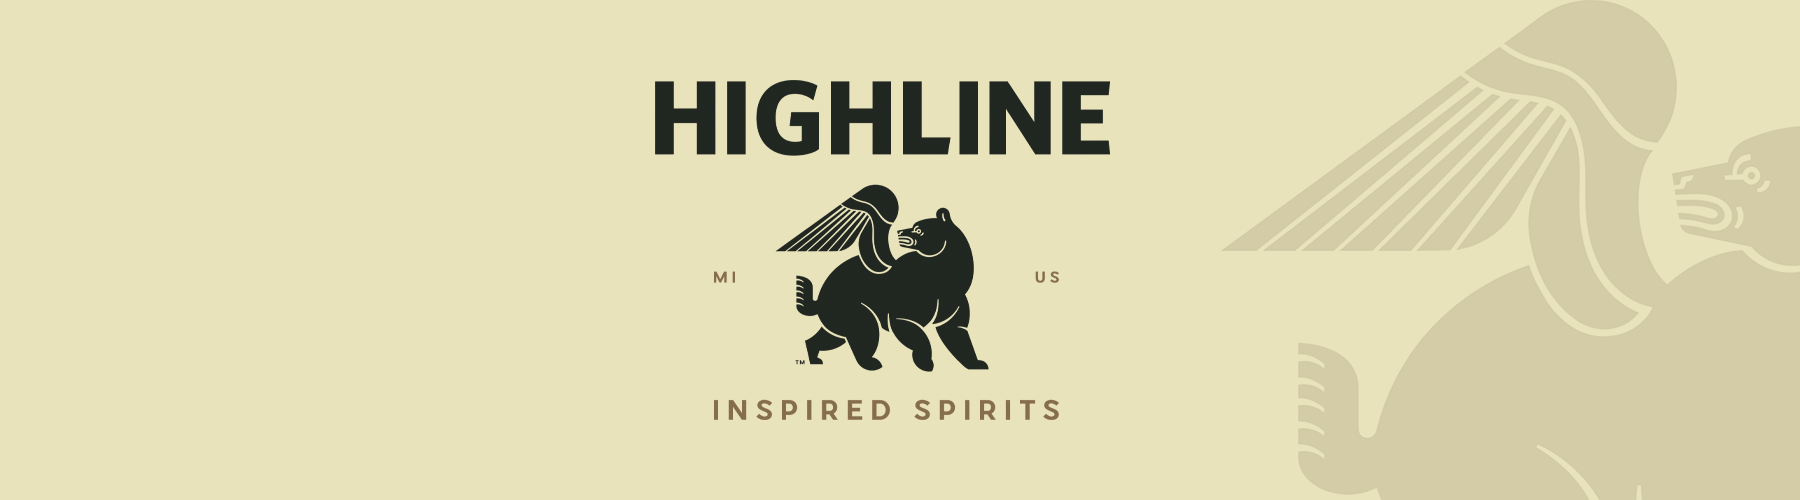 High Line logo